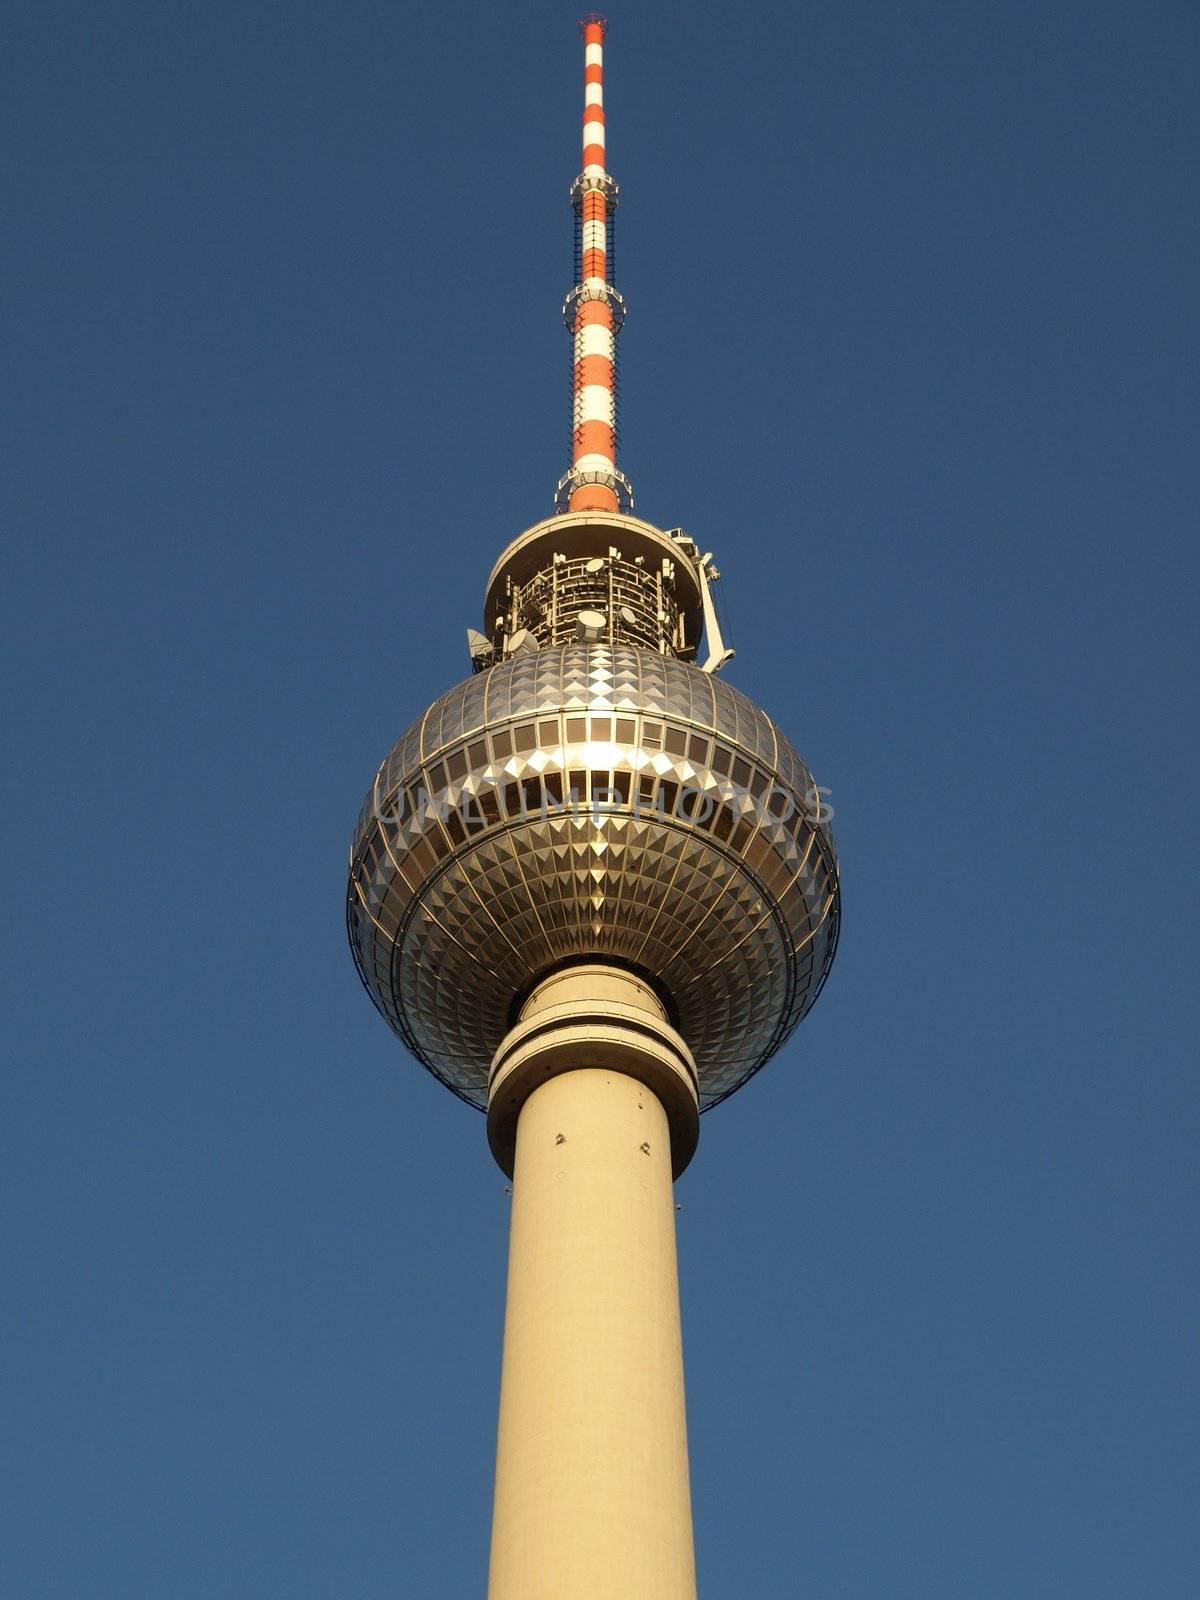 Berlin Fernsehturm television tower over blue sky